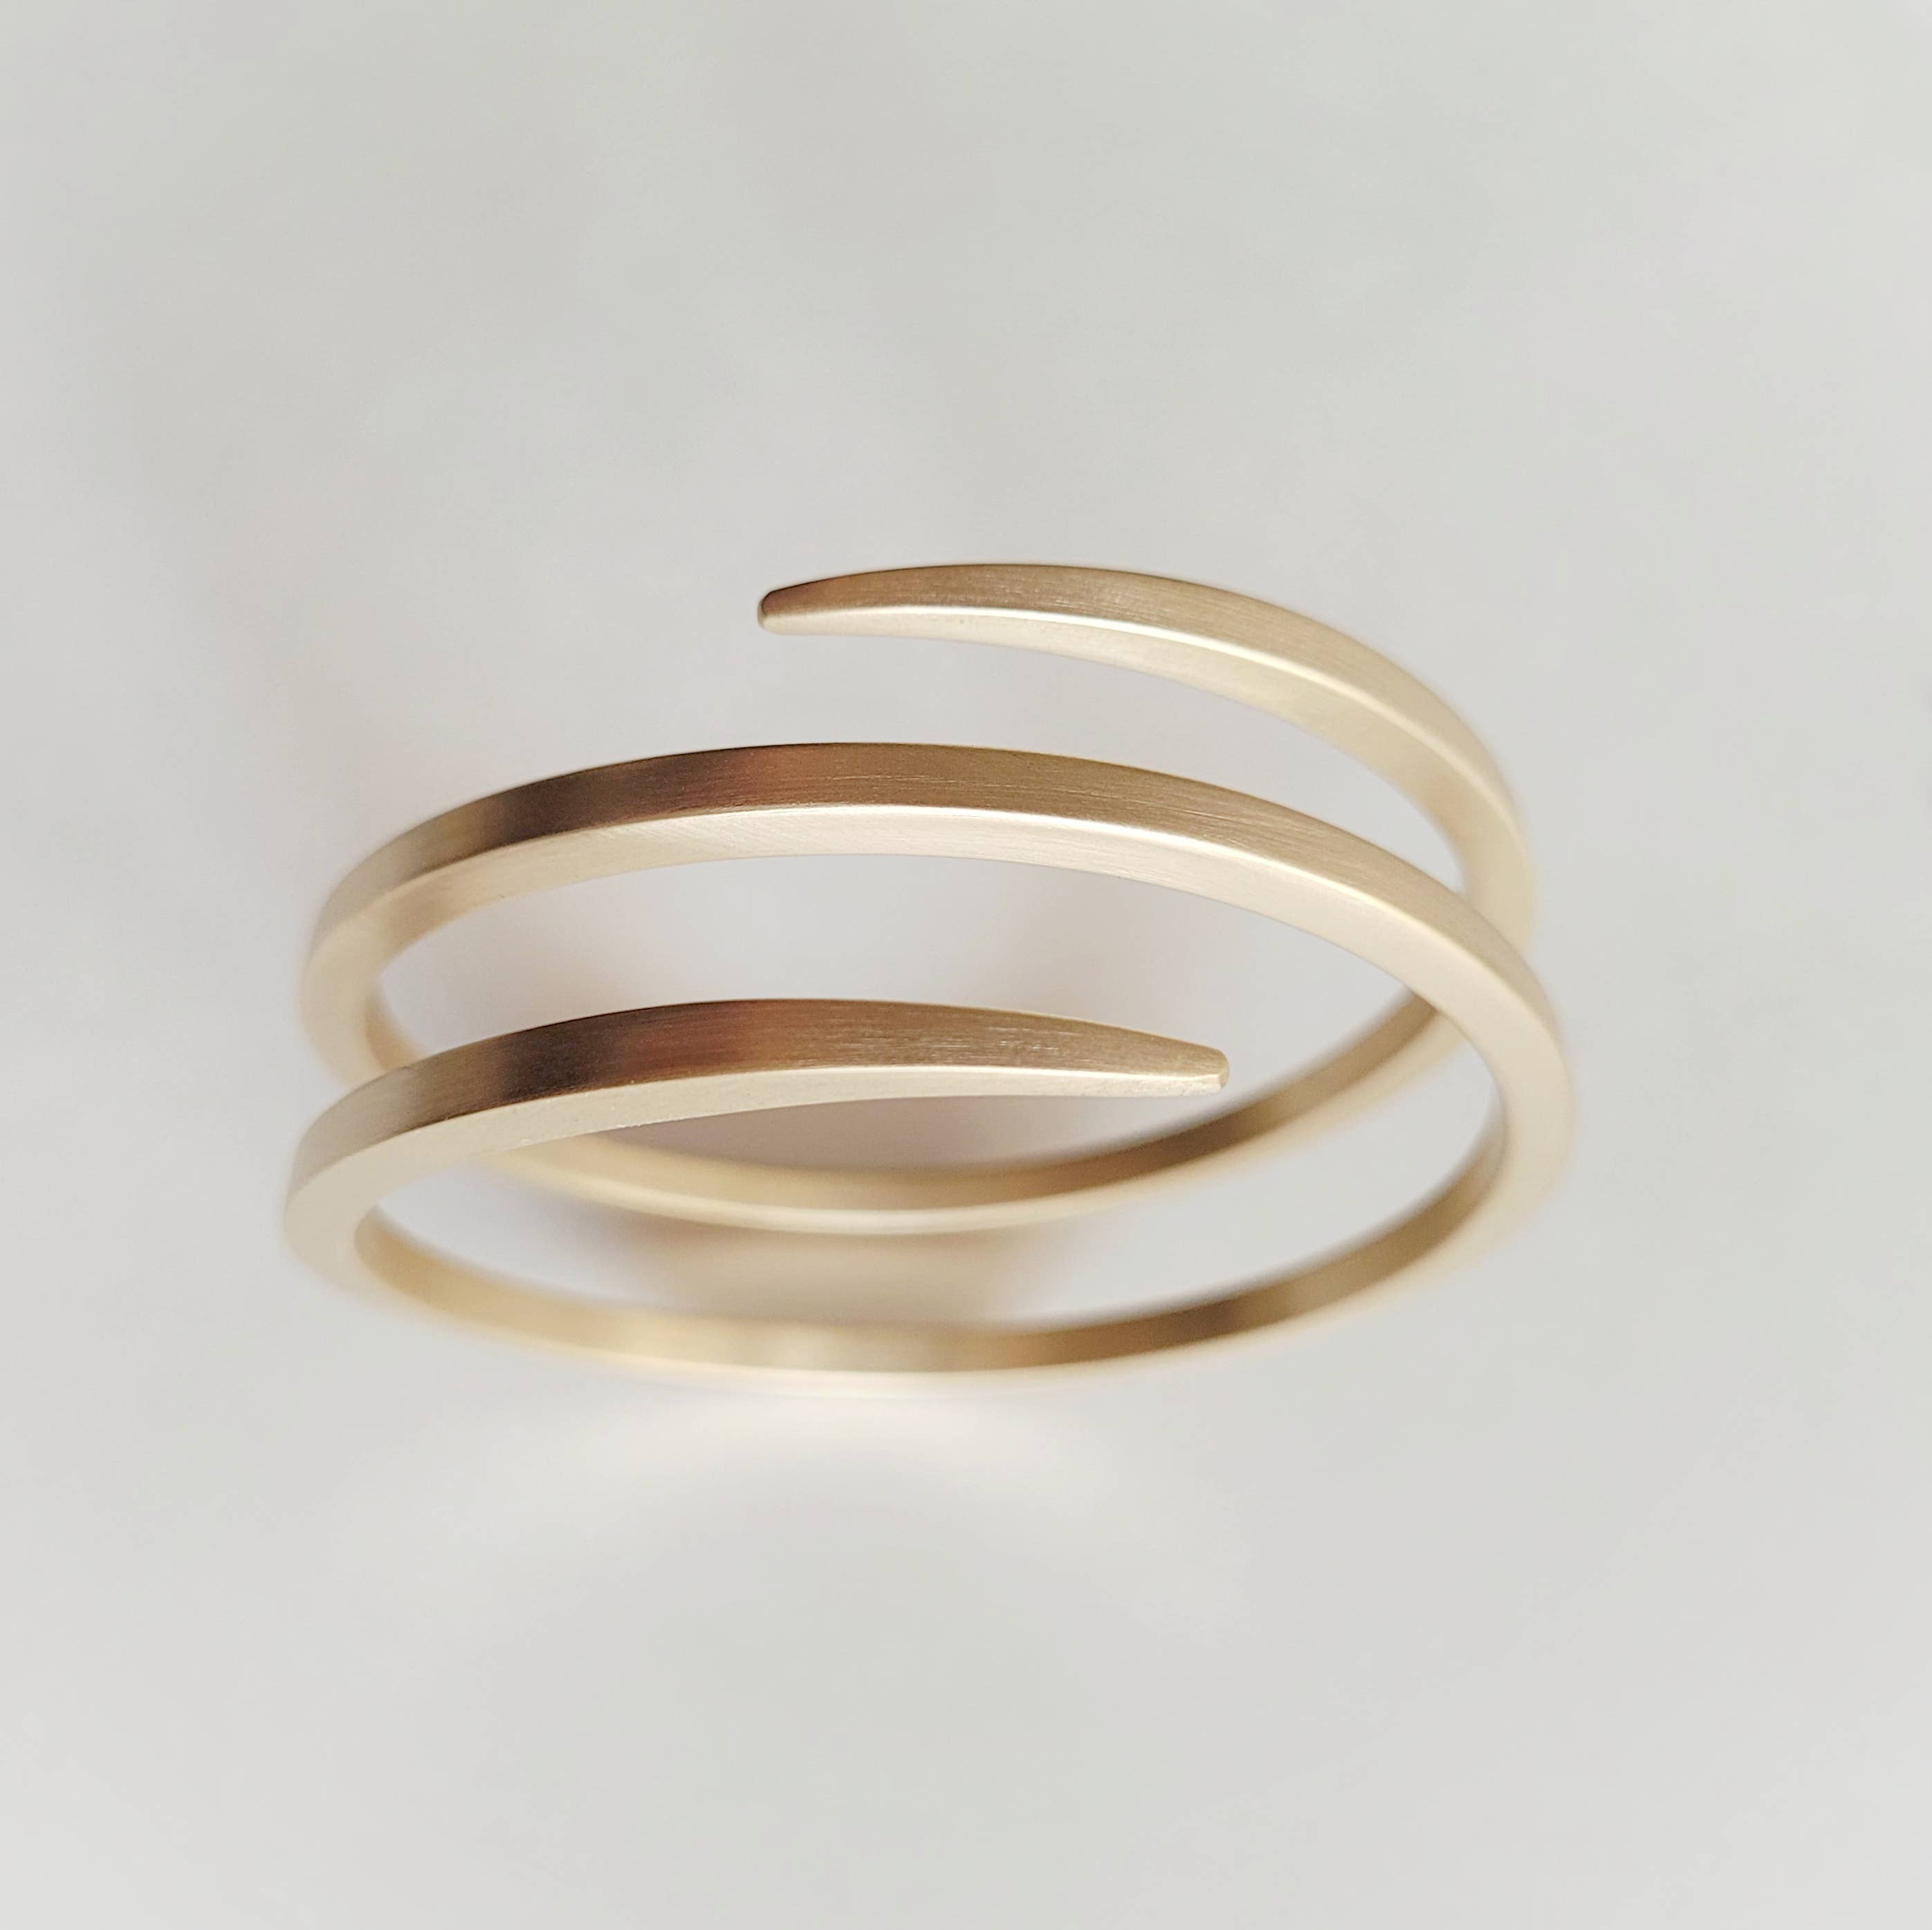 Solid brass handcrafted wrap swirl bangle cuff bracelet